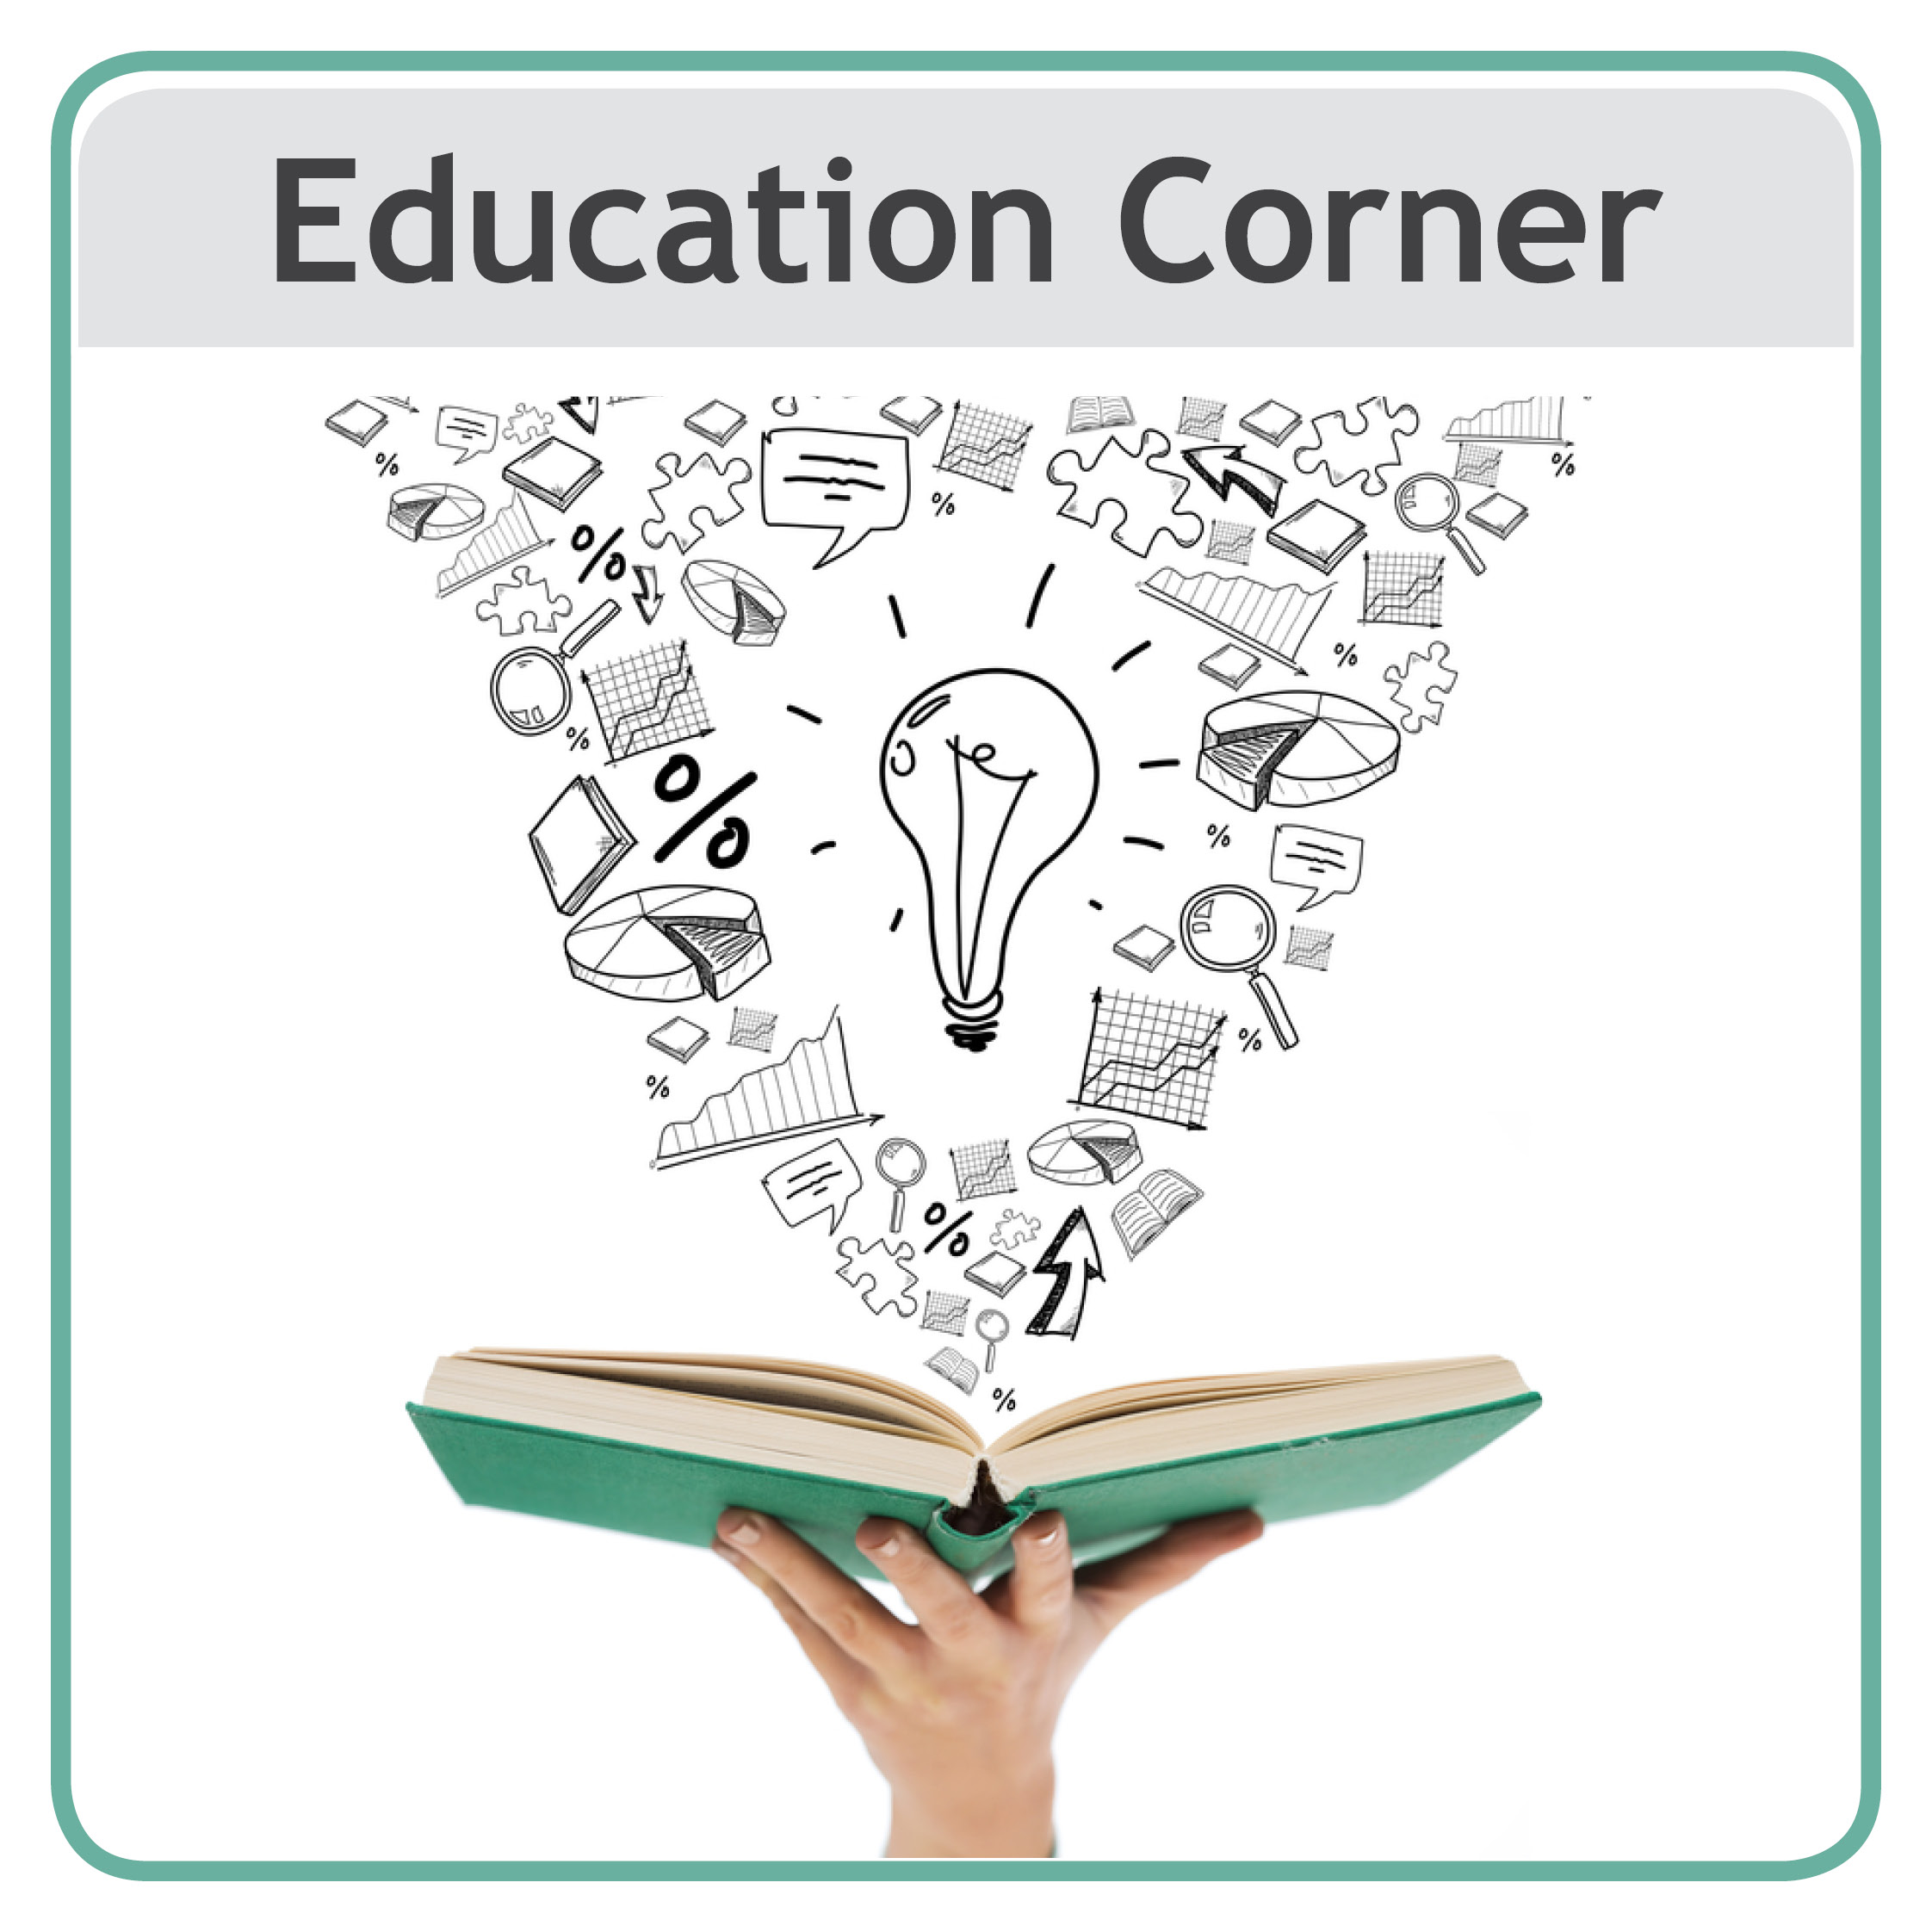 EDUCATION CORNER ICON 2019.jpg